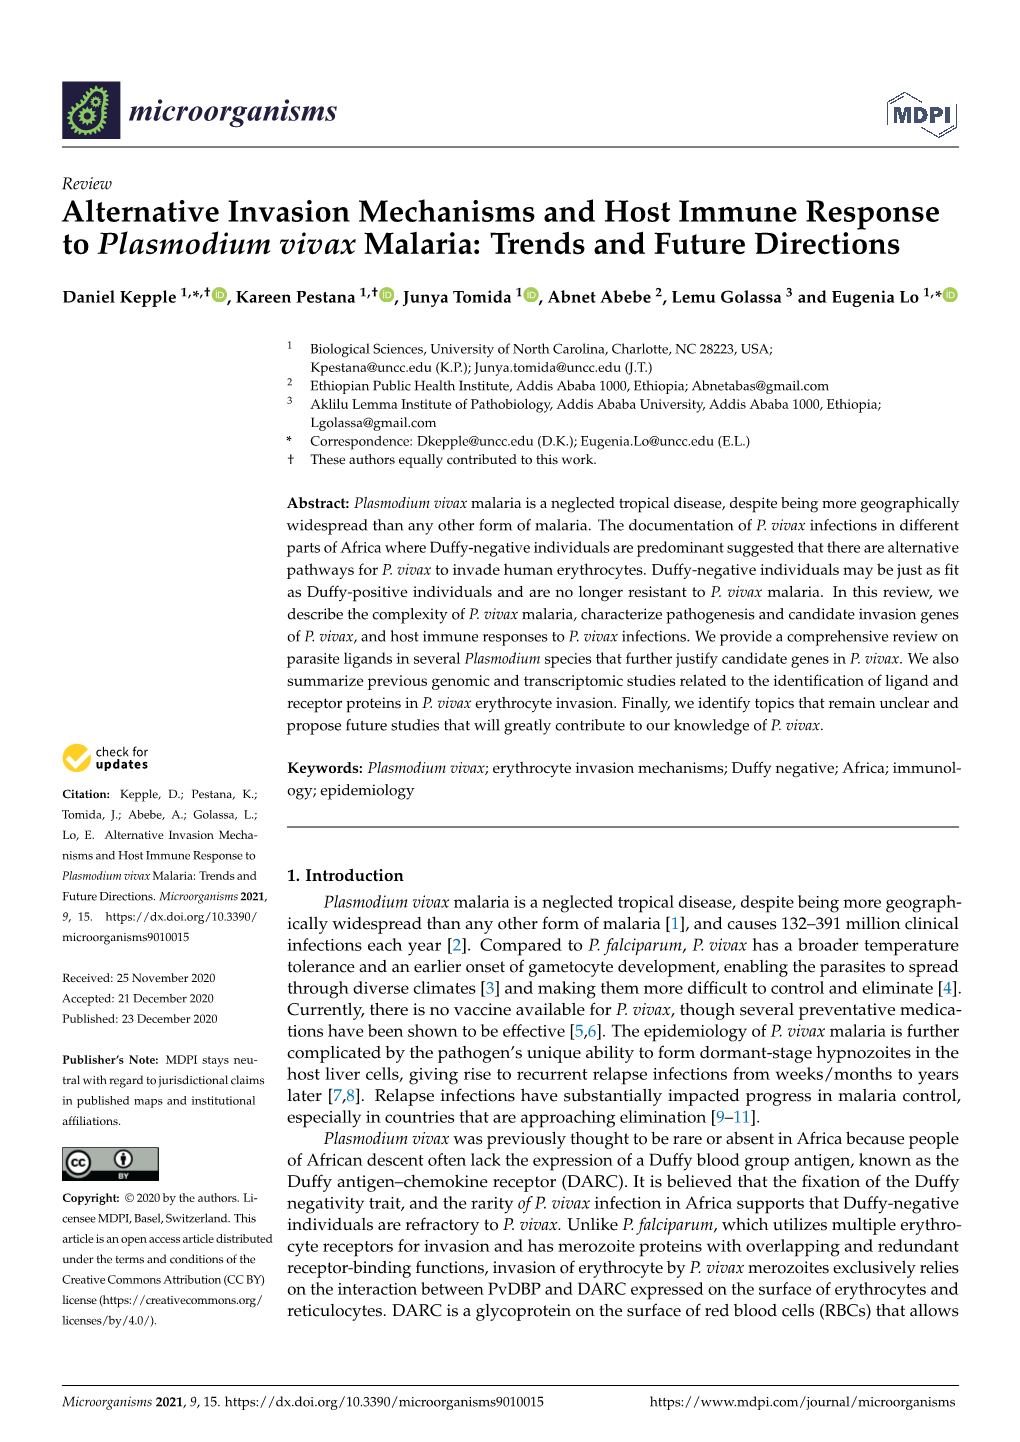 Alternative Invasion Mechanisms and Host Immune Response to Plasmodium Vivax Malaria: Trends and Future Directions